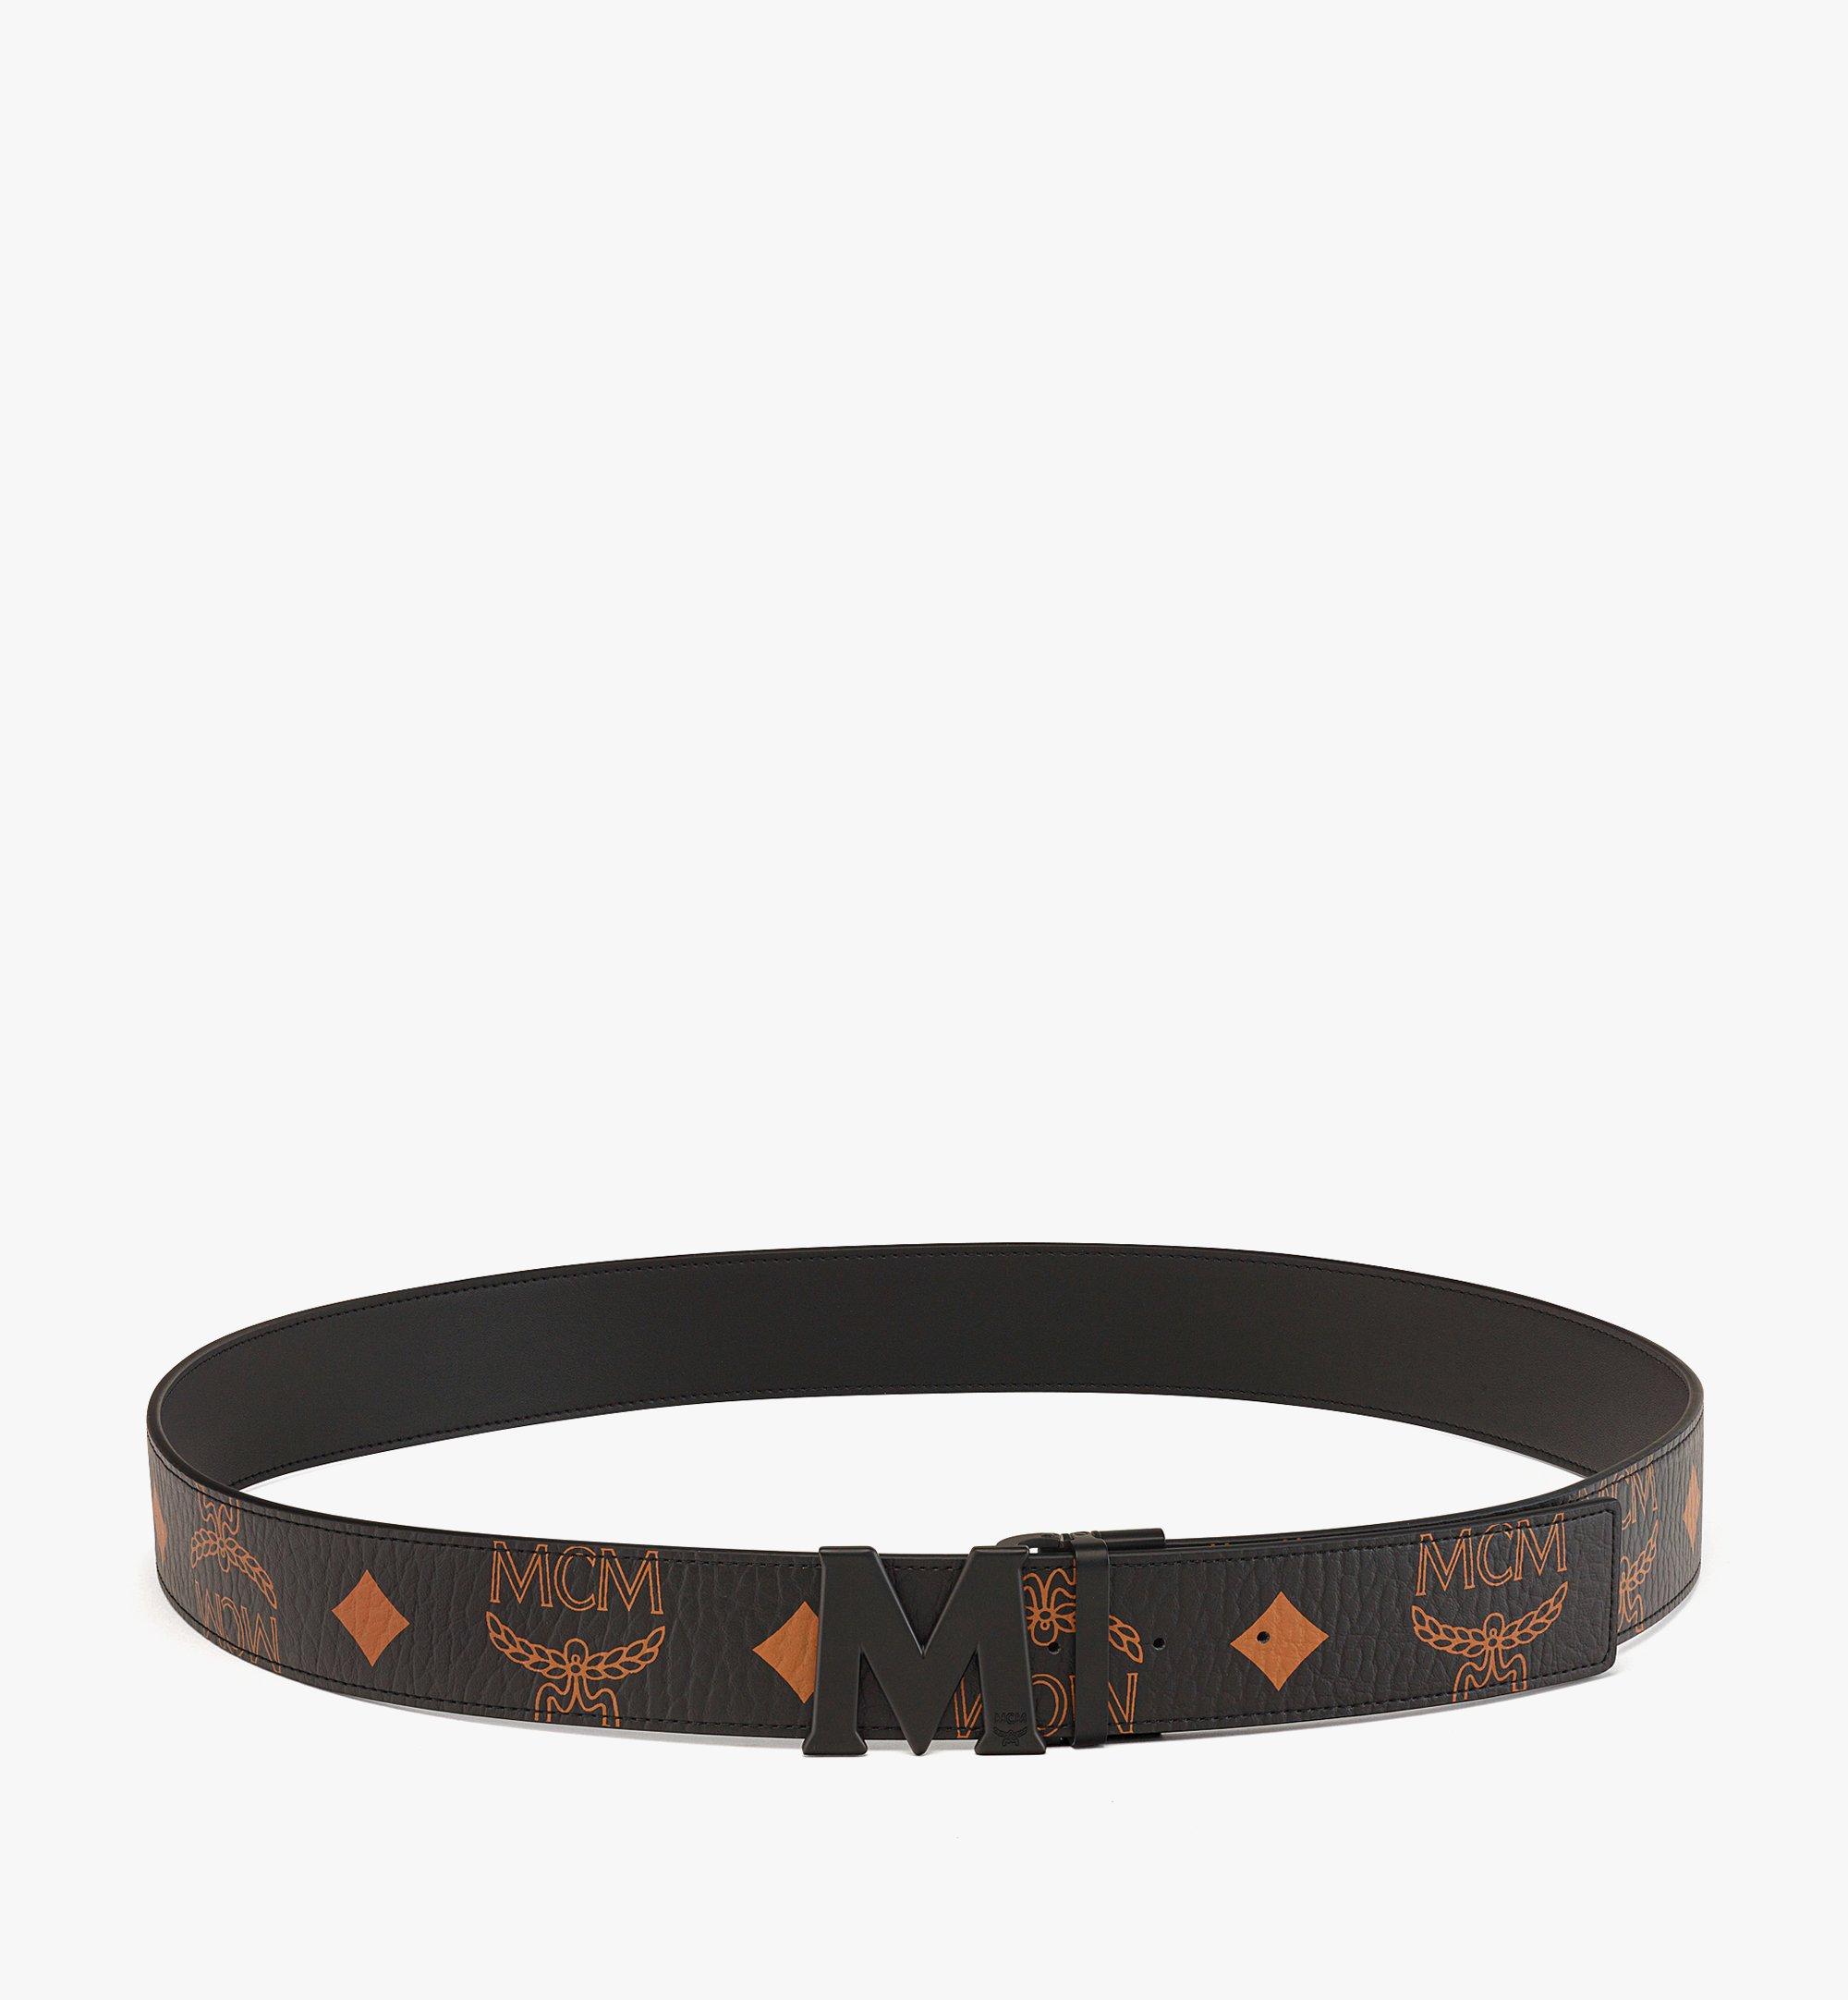 MCM Leather Belt - Pink Belts, Accessories - W3049511